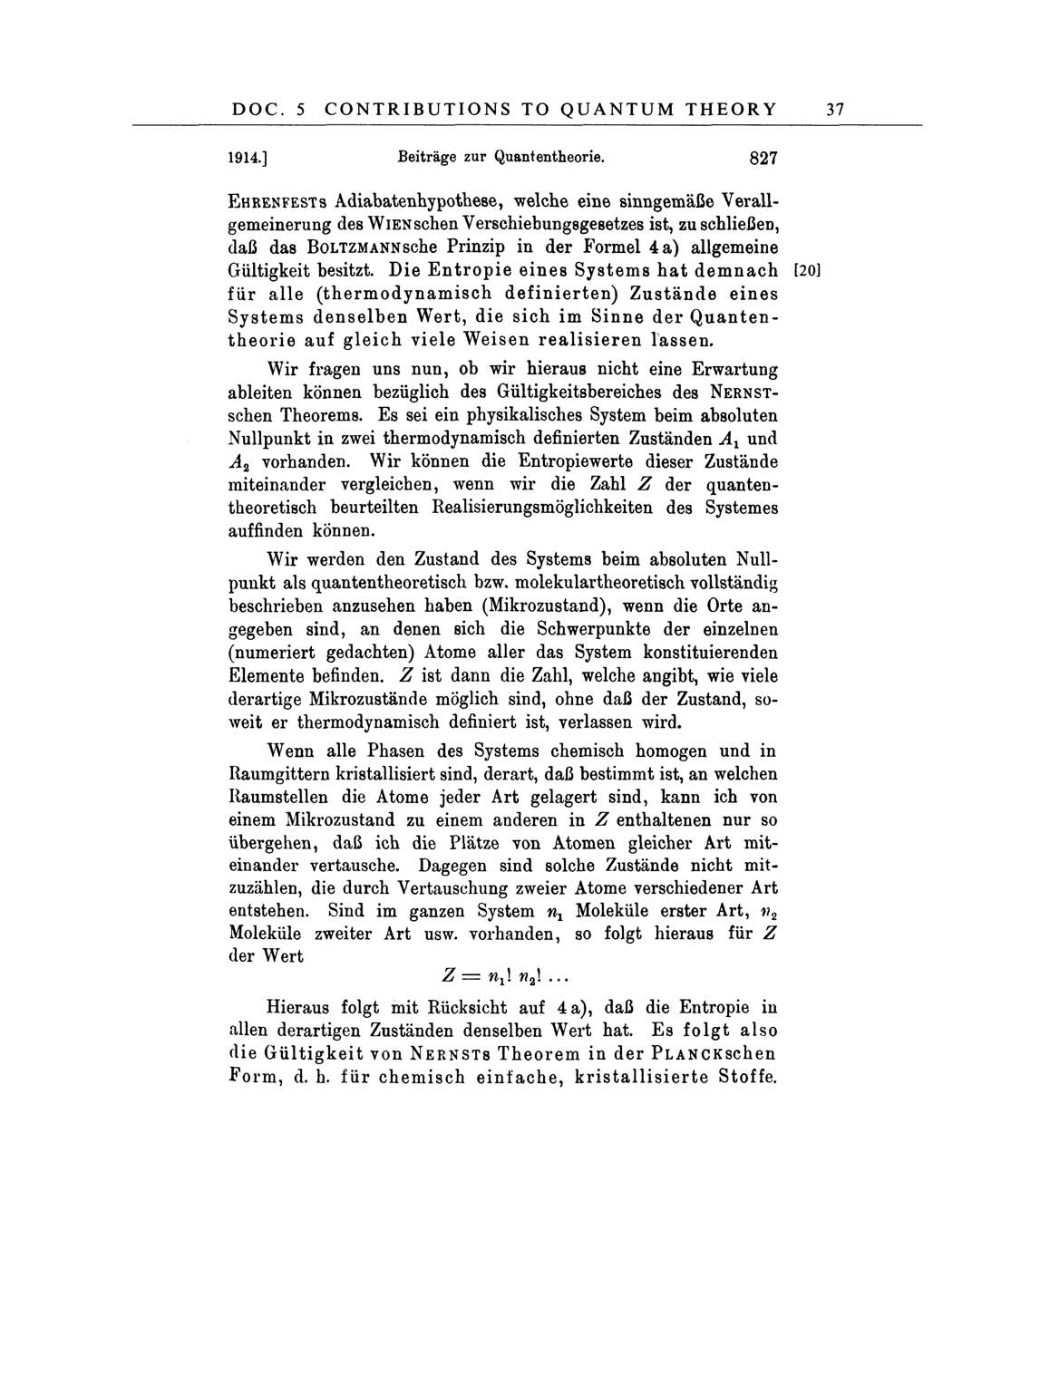 Volume 6: The Berlin Years: Writings, 1914-1917 page 37